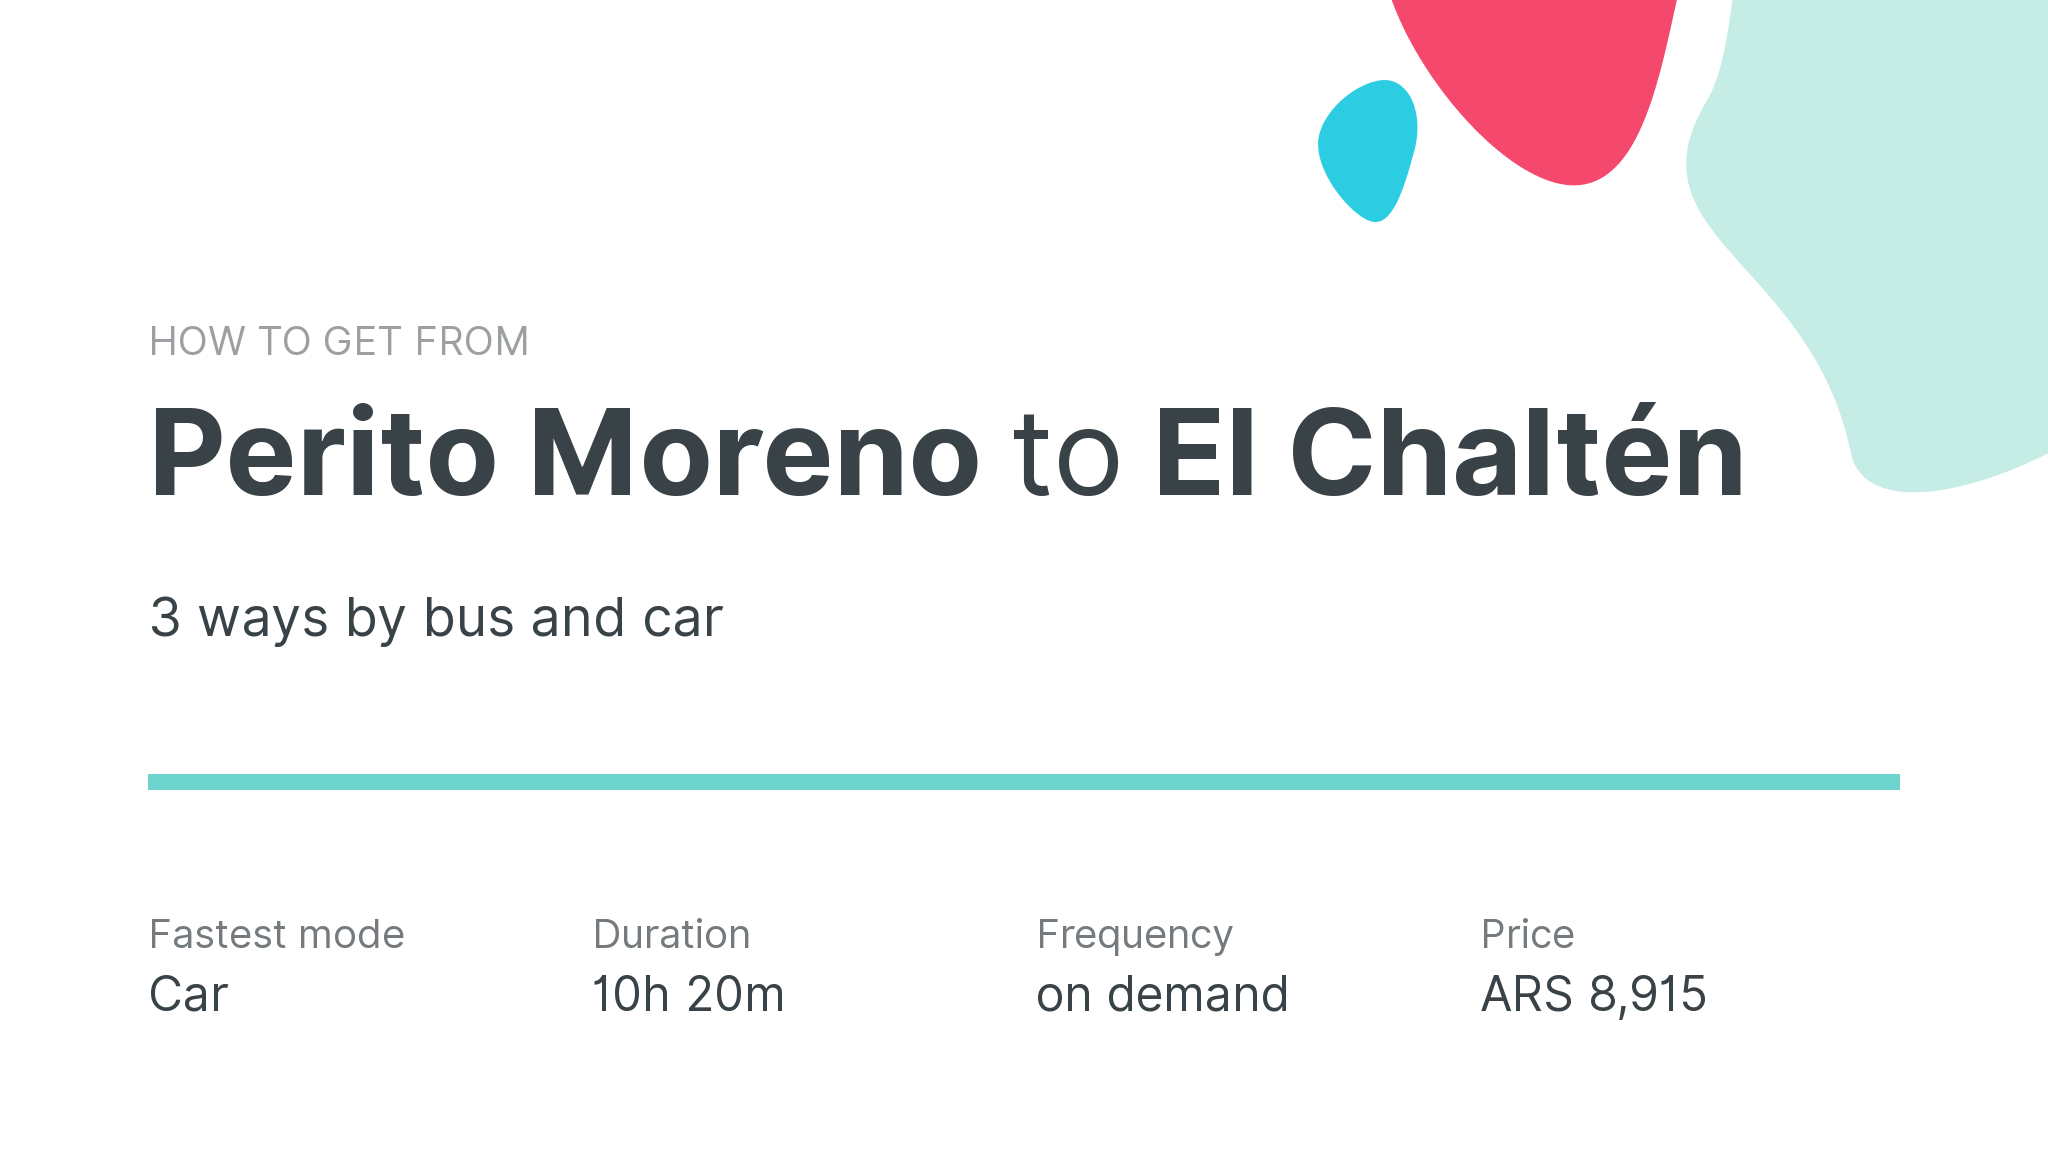 How do I get from Perito Moreno to El Chaltén